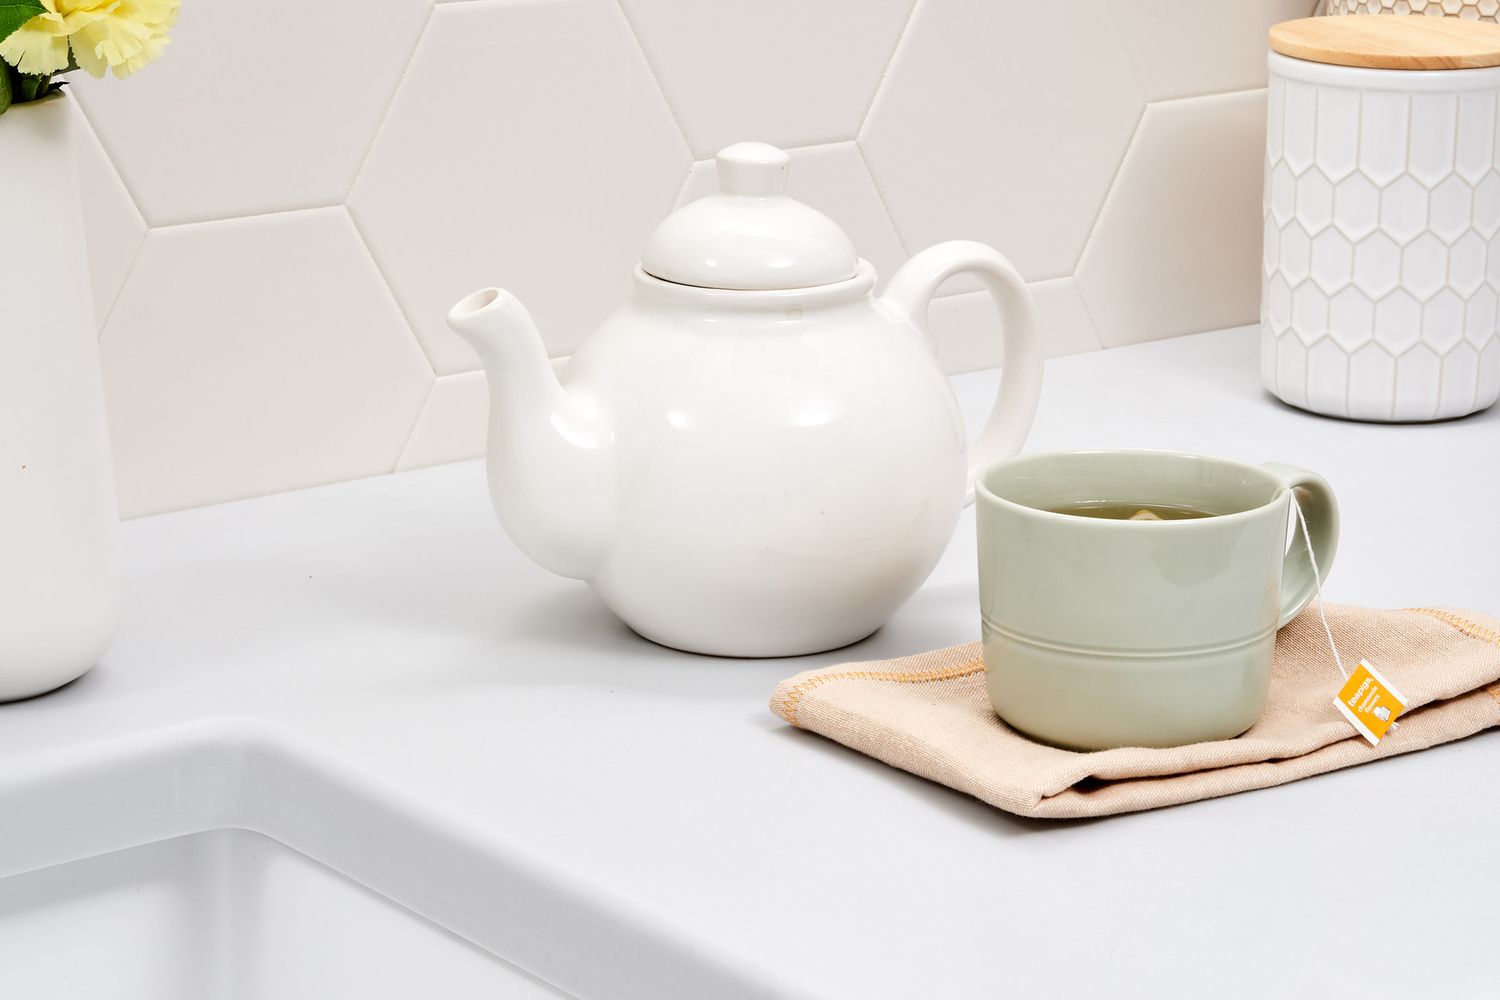 theepot en kopje thee met kruiden in de keuken